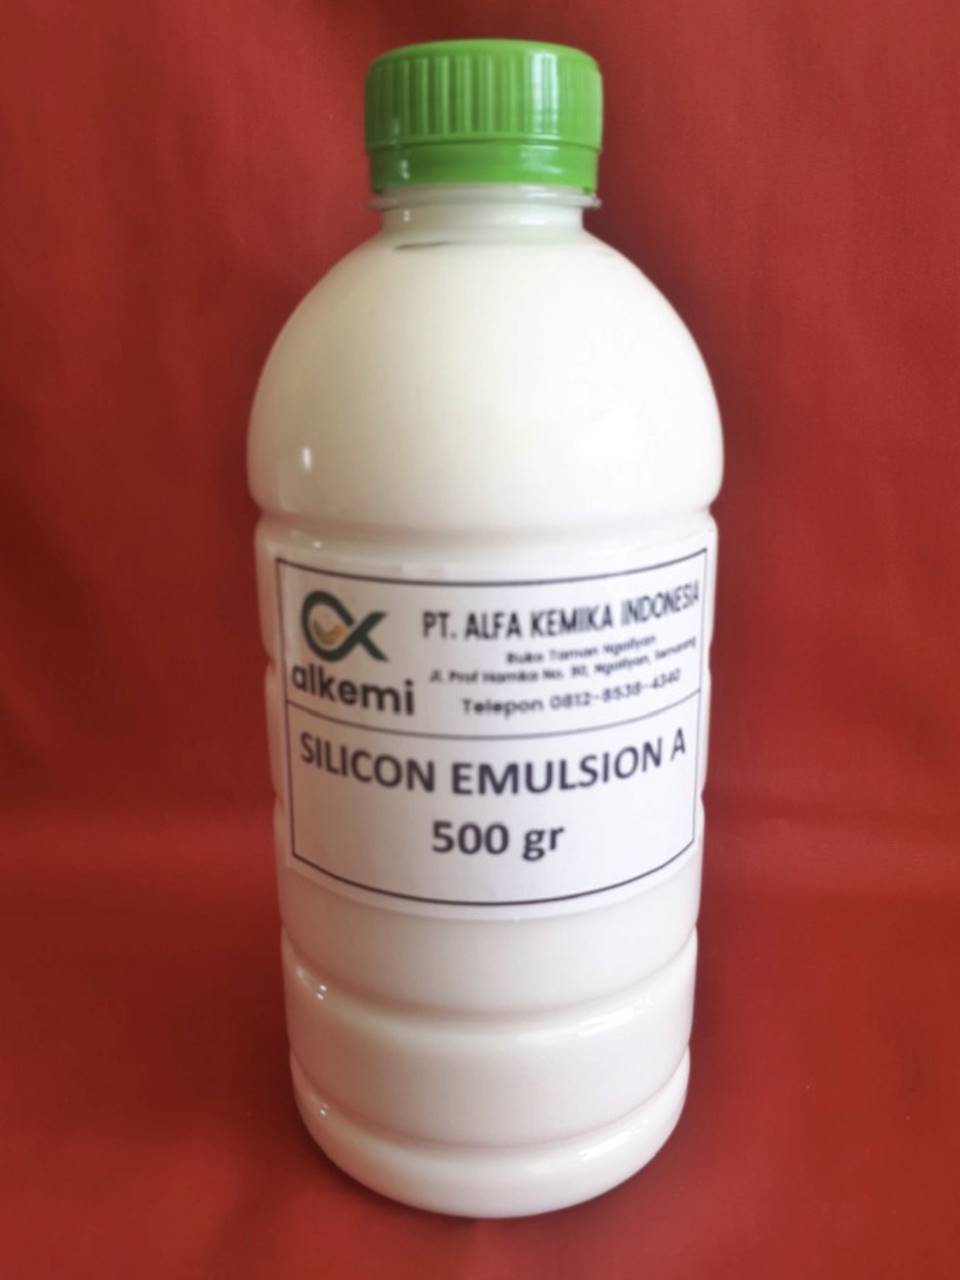 Silicon Emulsion / Semir Ban